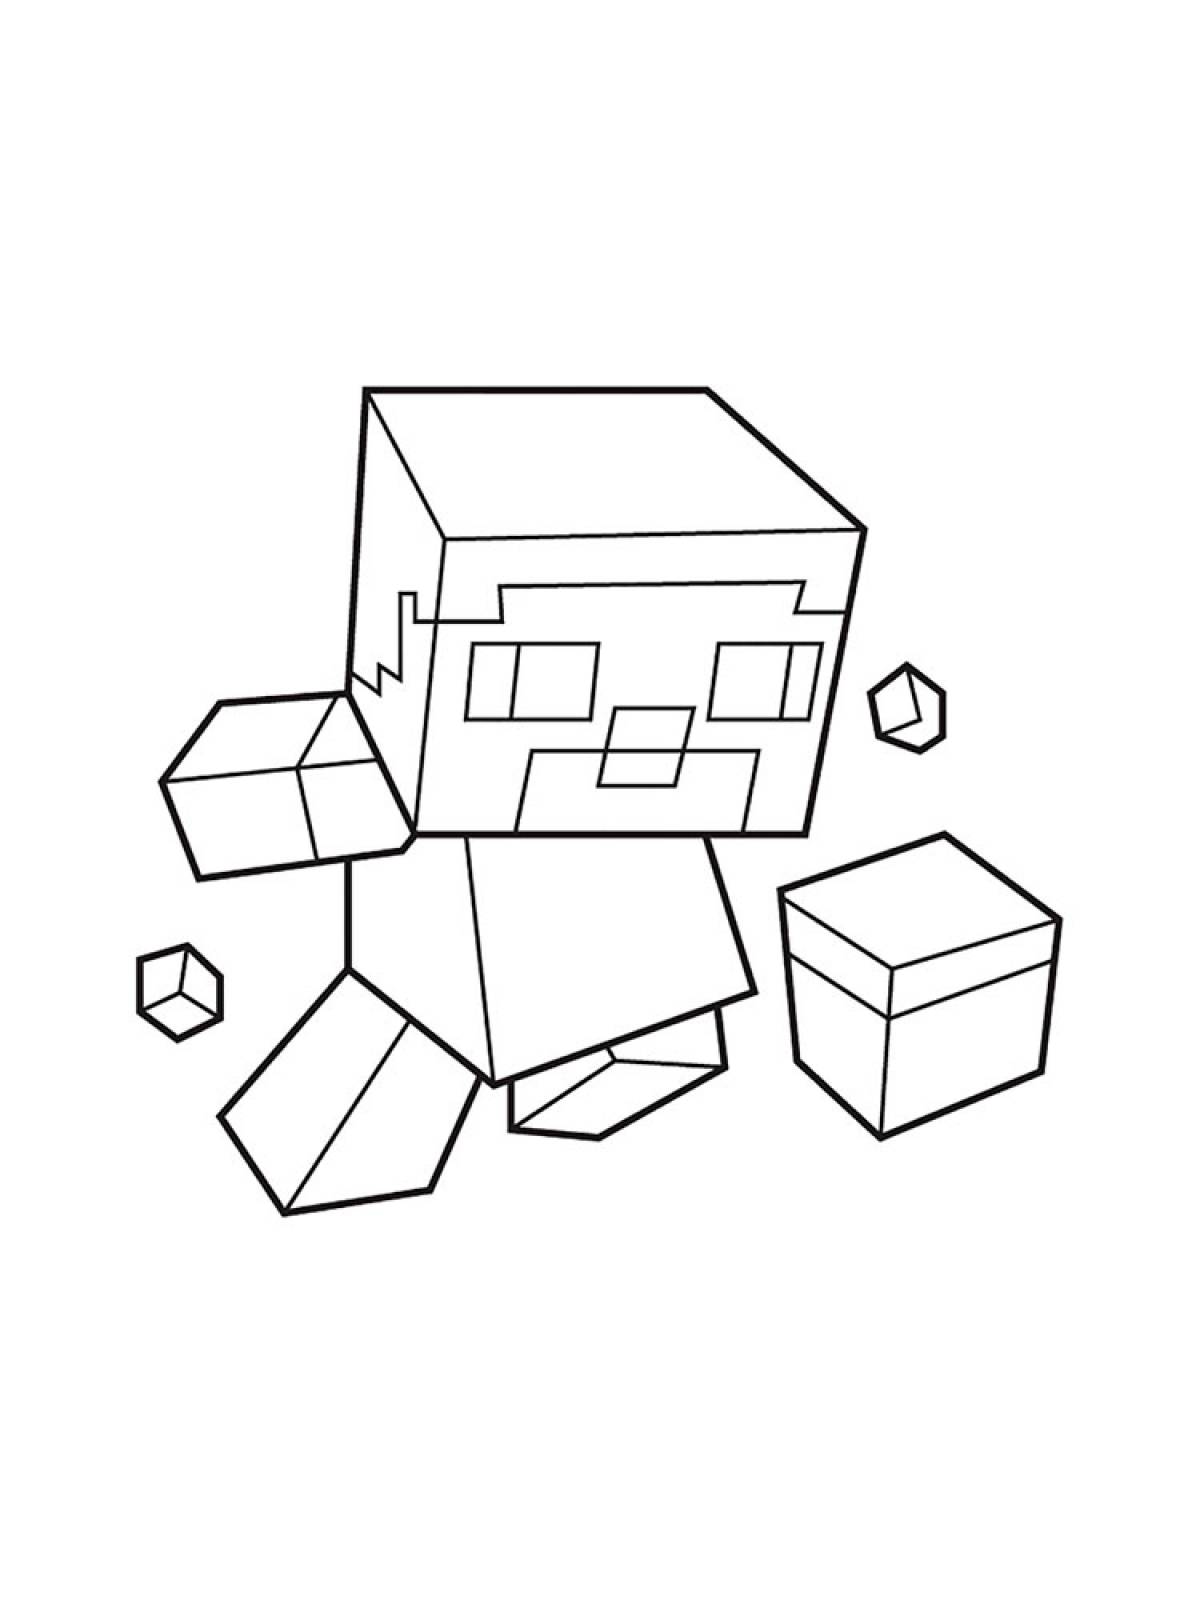 Cube 14